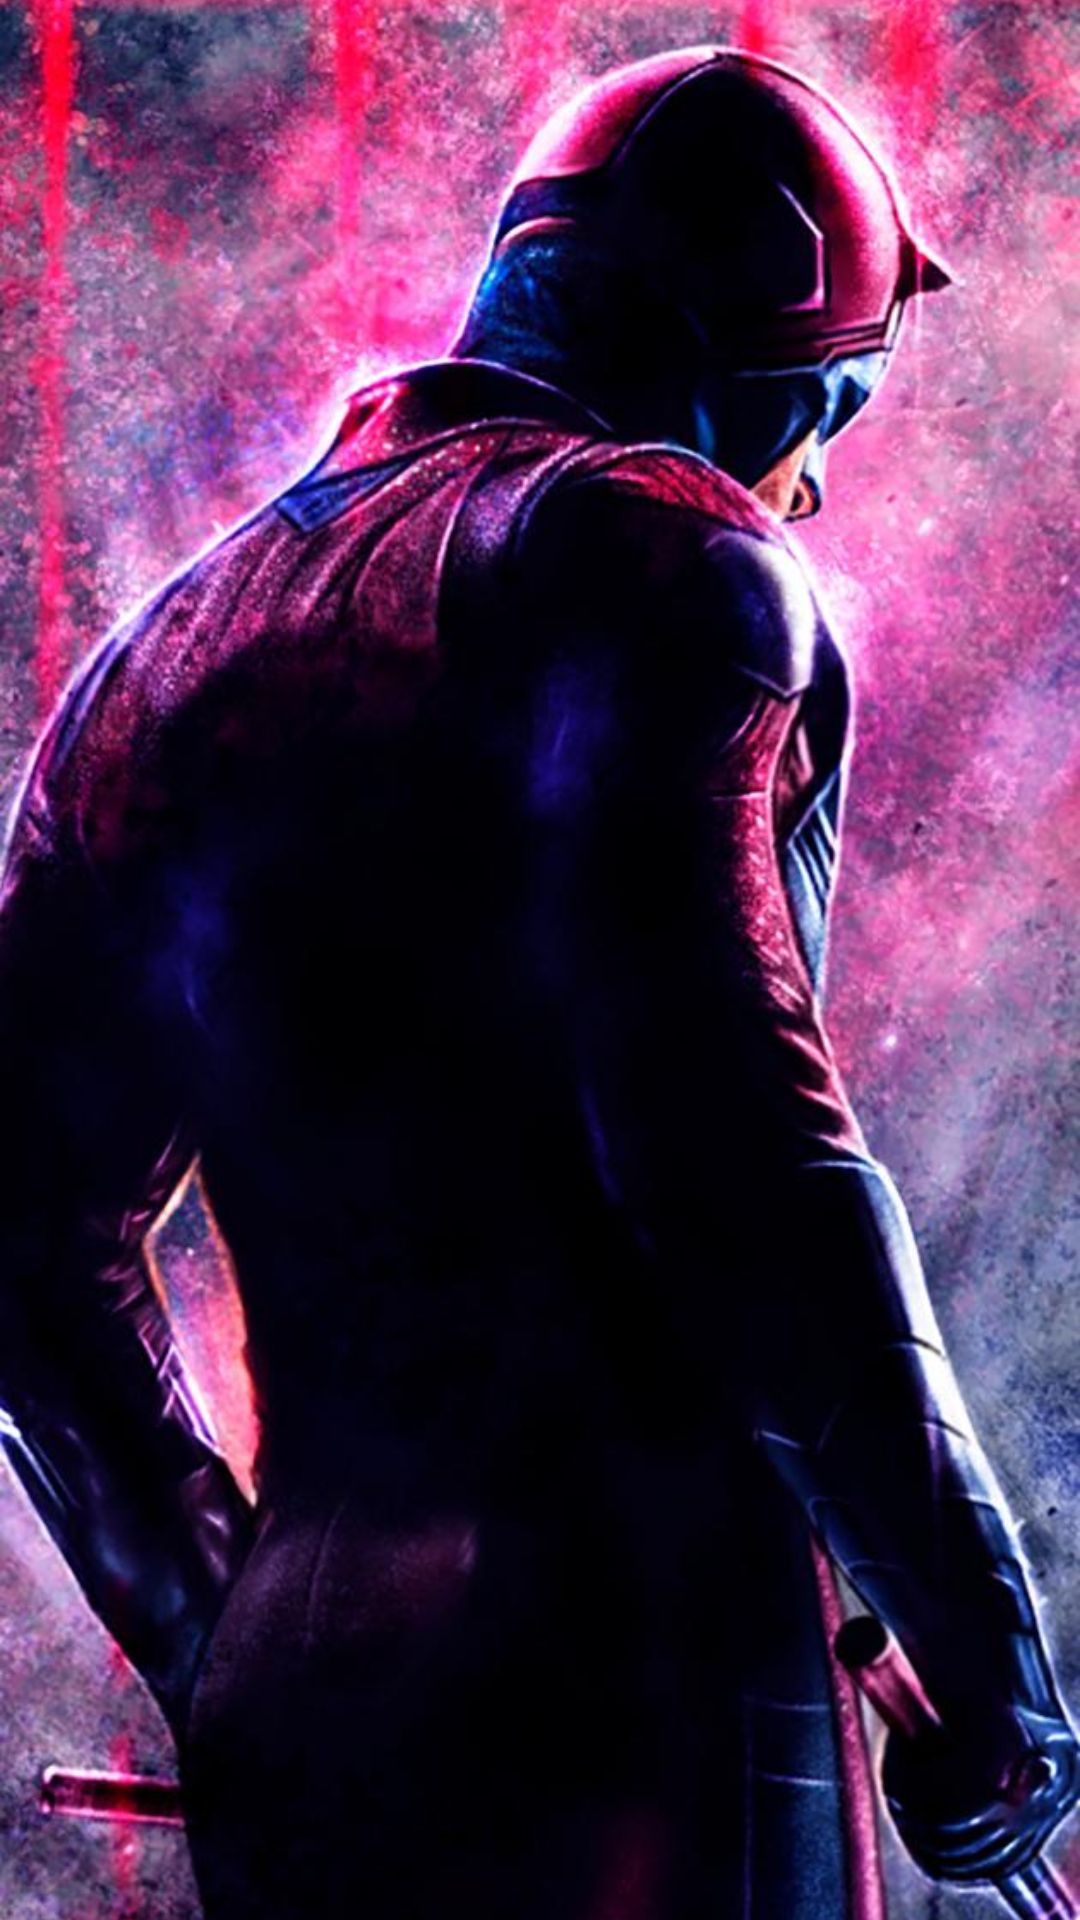 Daredevil Wallpapers - Top 30 Best Daredevil Backgrounds Download